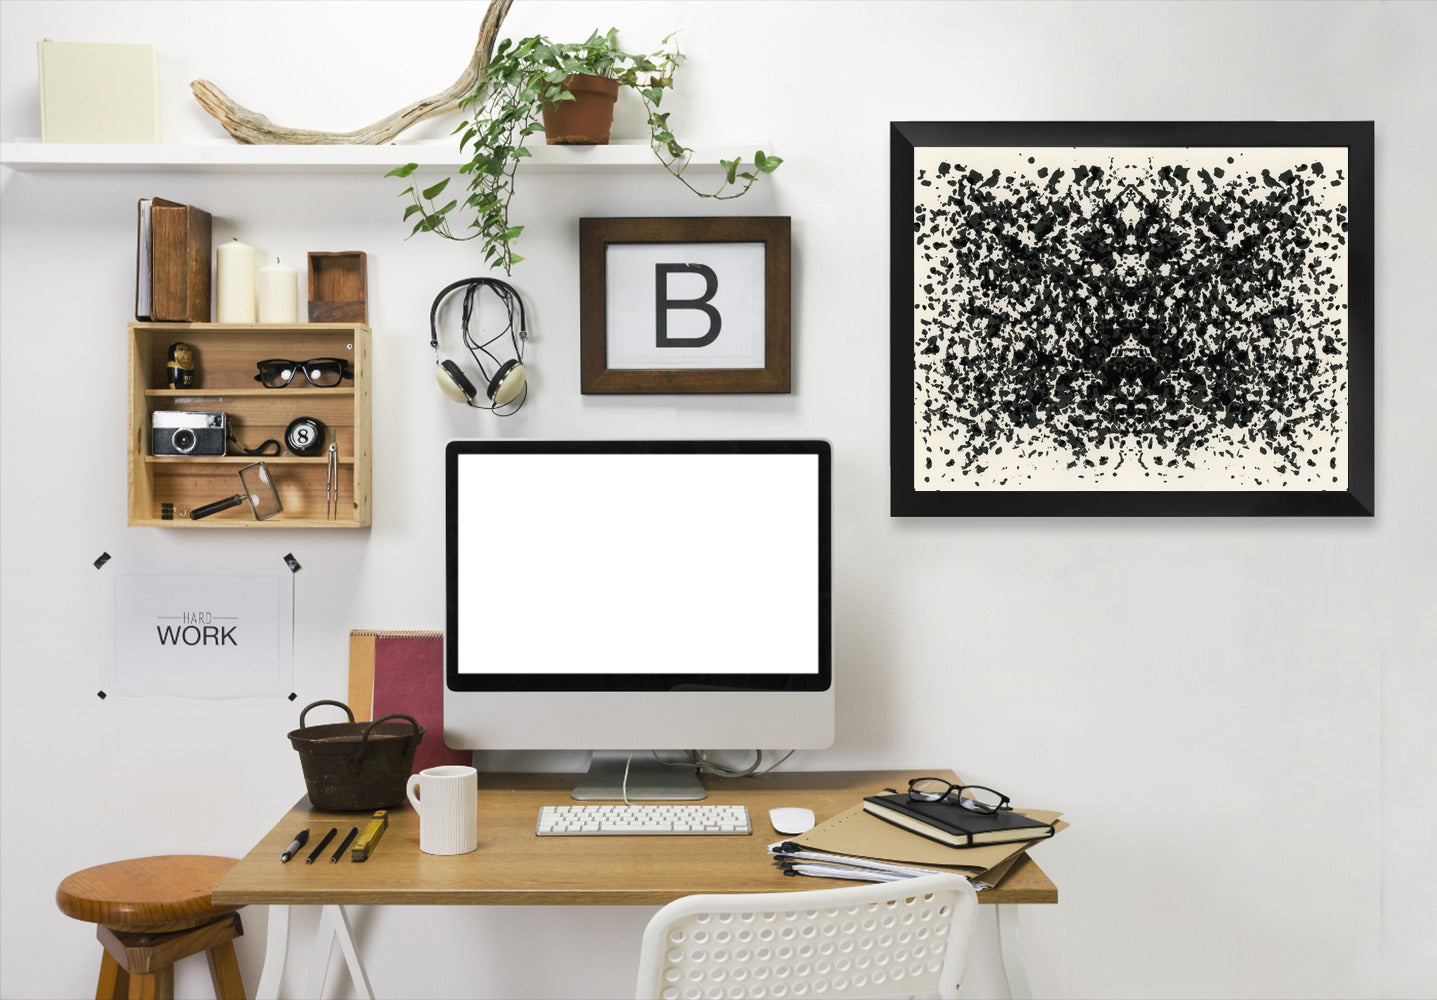 Ink Blots Iii Master Layer By Chaos & Wonder Design - Black Framed Print - Wall Art - Americanflat